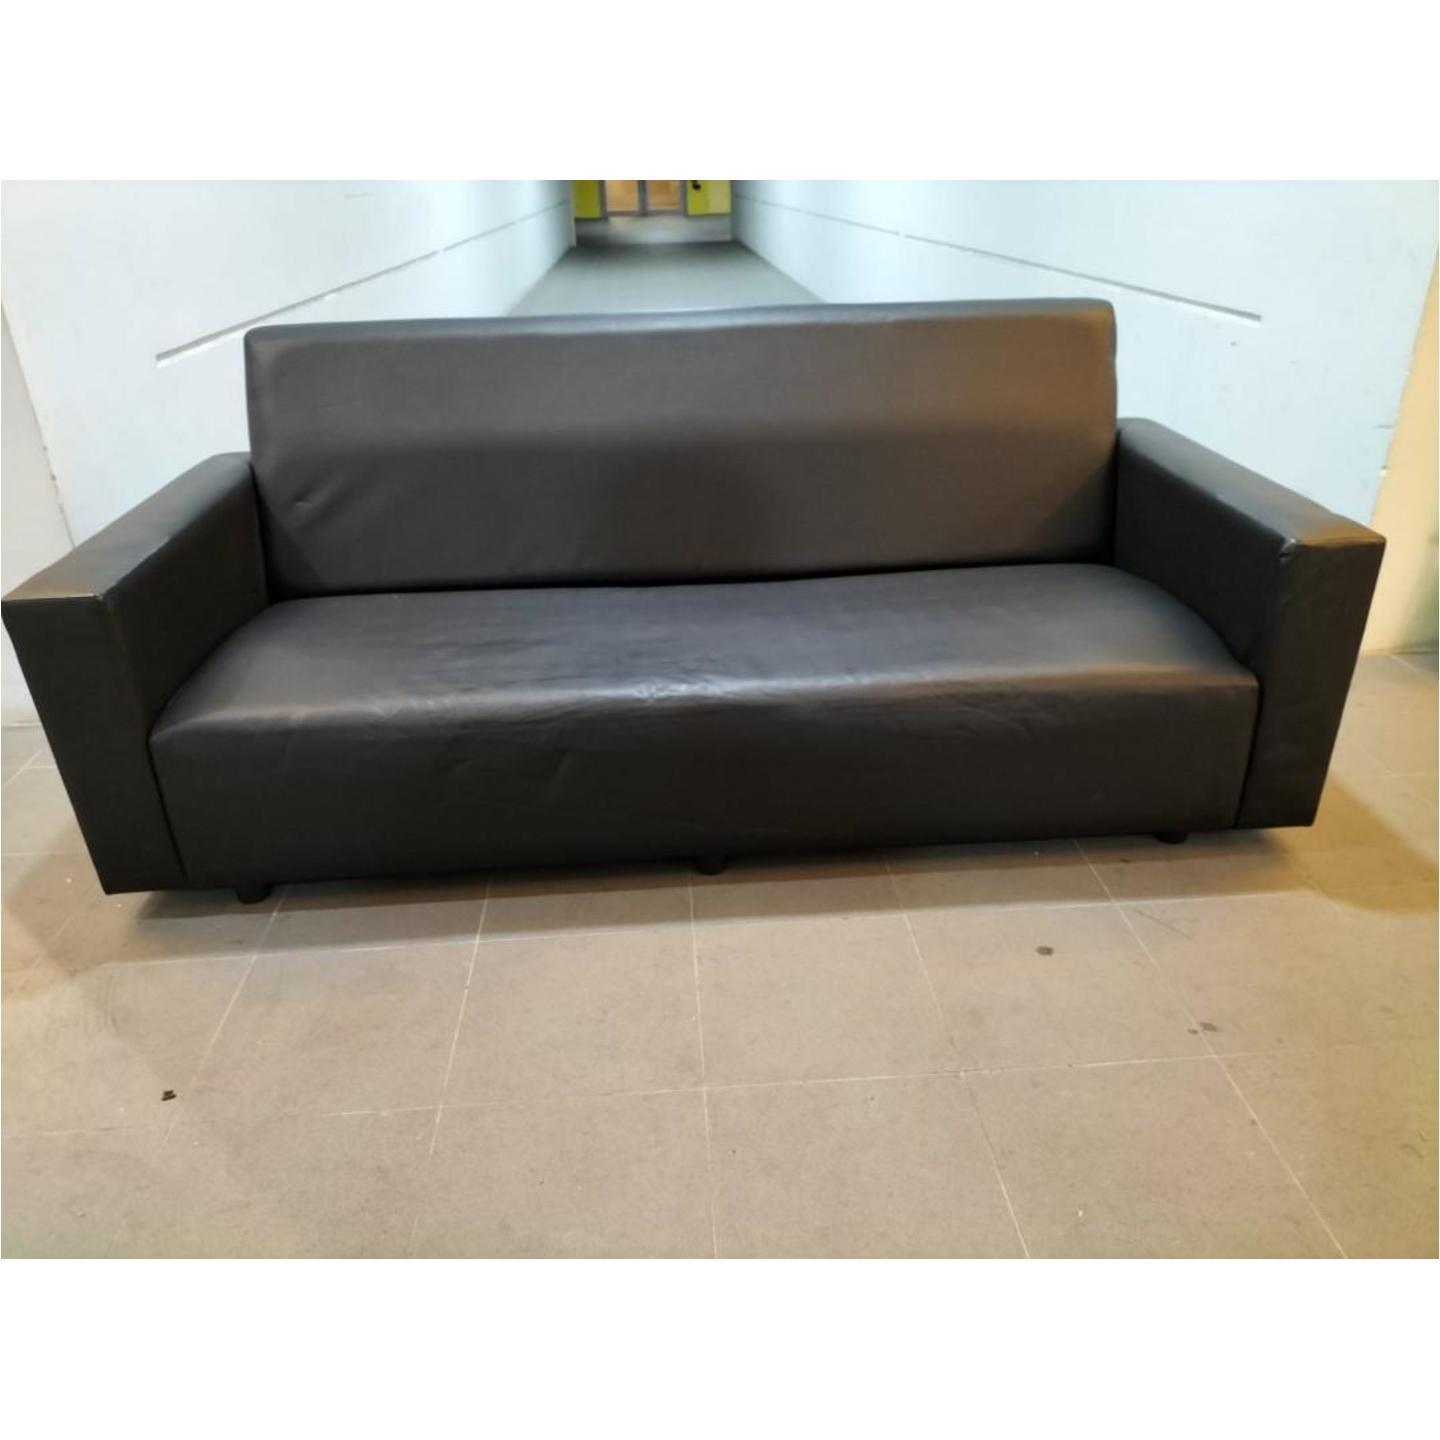 SANDLER 3 Seater Sofa in DARK GREY PVC